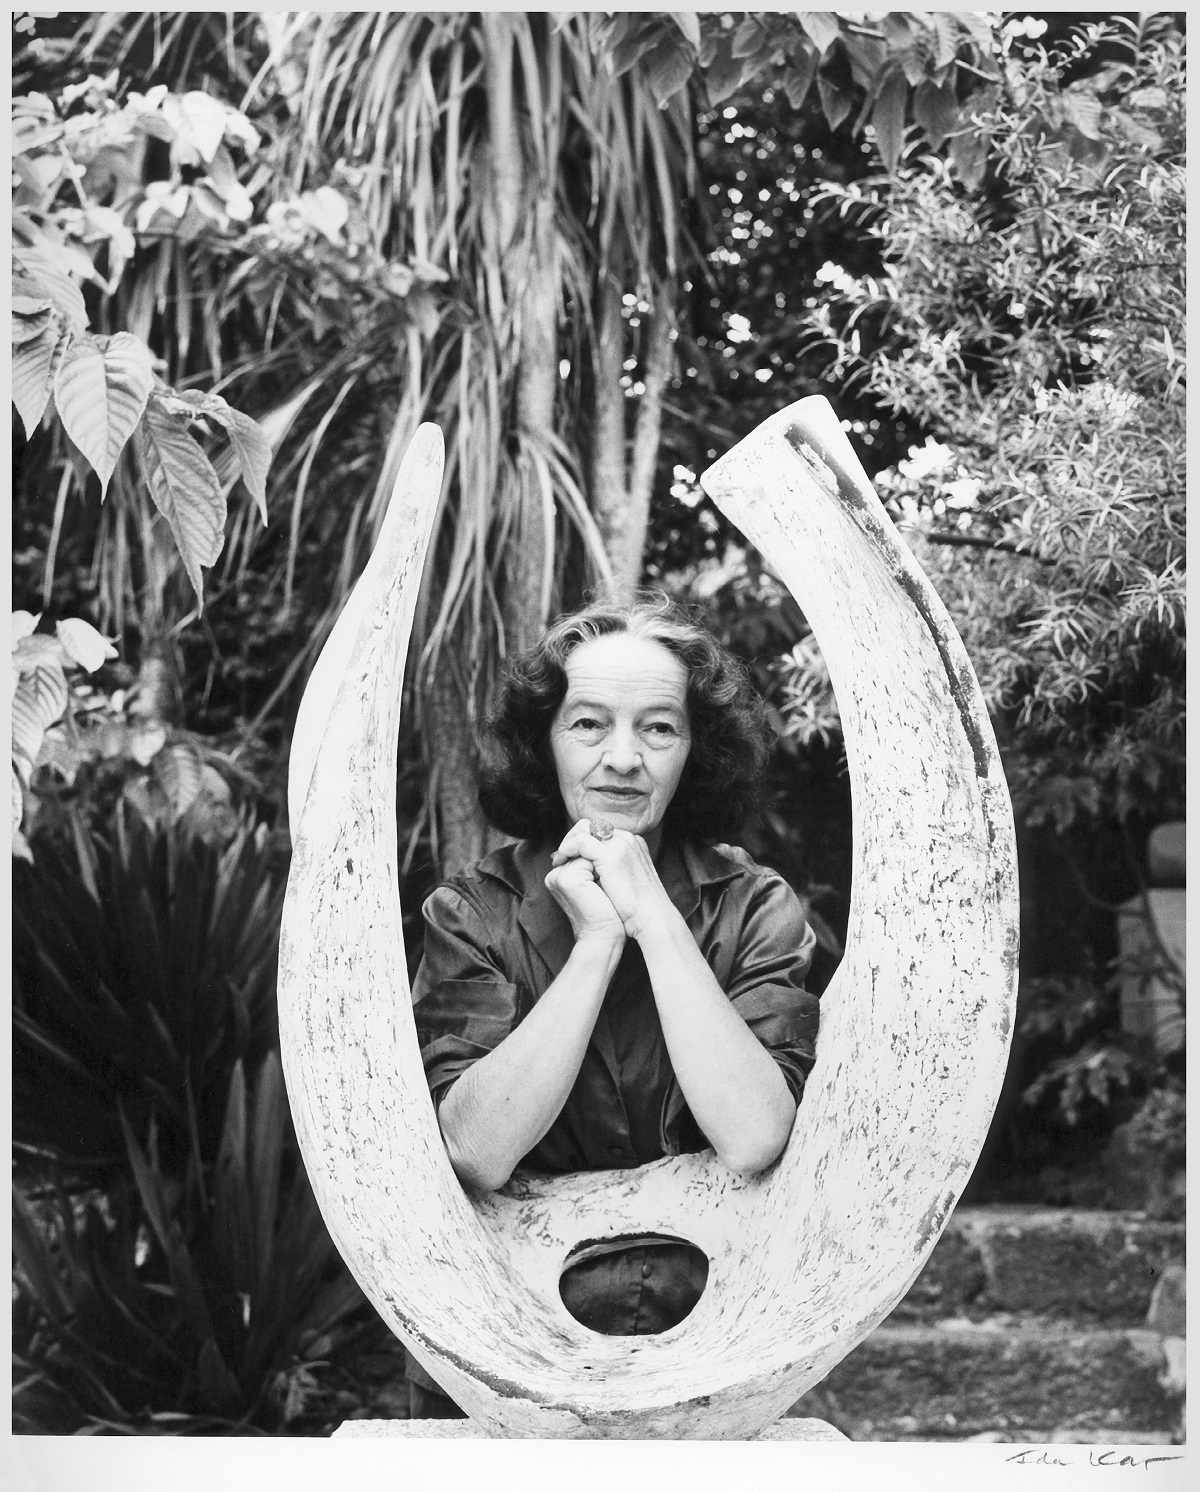 Barbara Hepworth with Curved Form (Trevalgan) in the garden of Trewyn Studio, St Ives, by Ida Kar 1961. Courtesy National Portrait Gallery London